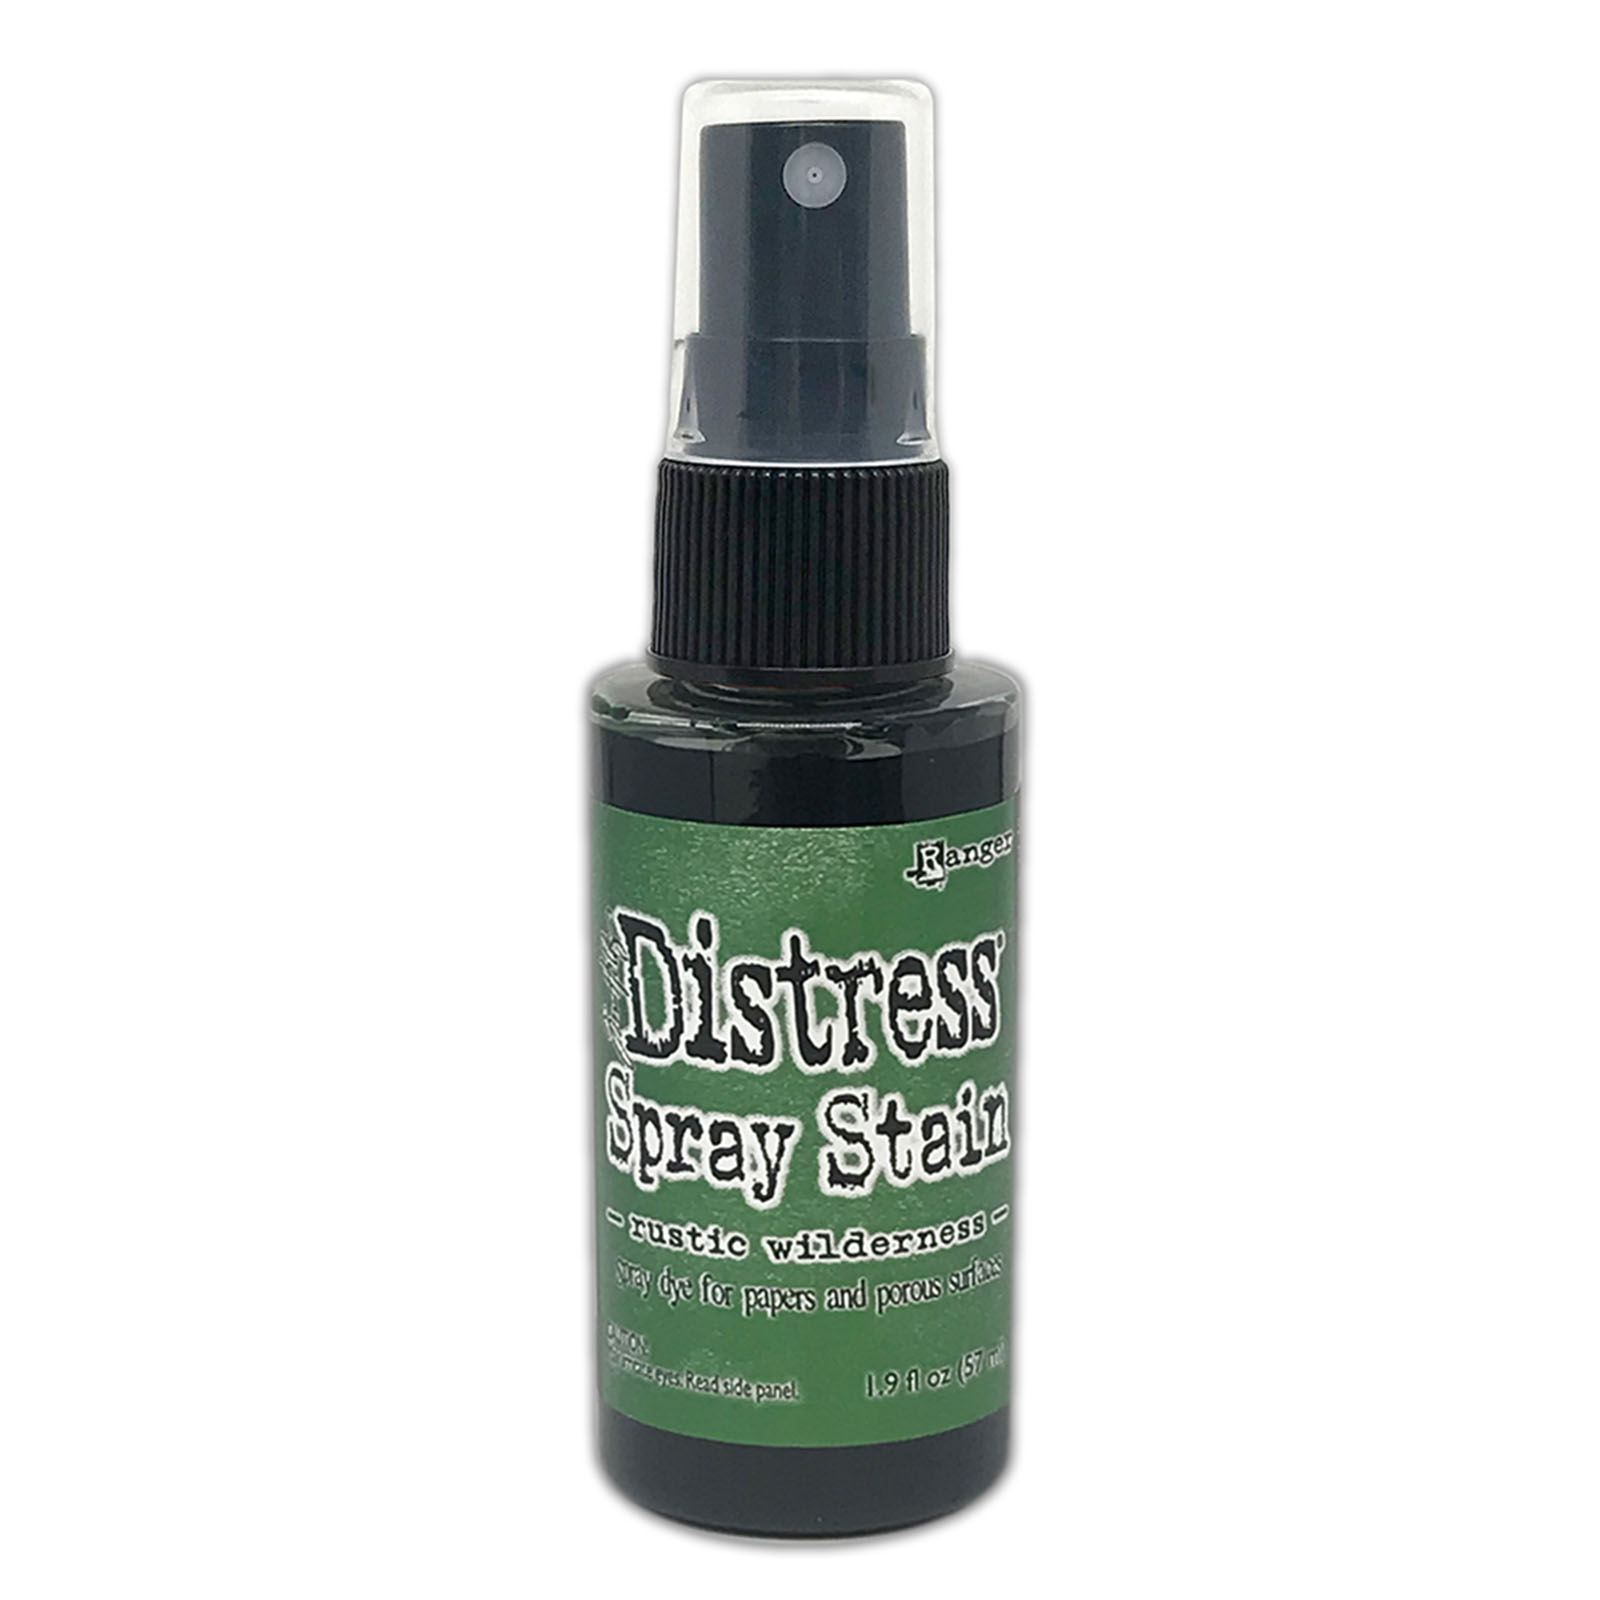 Ranger • Distress spray stain Rustic wilderness